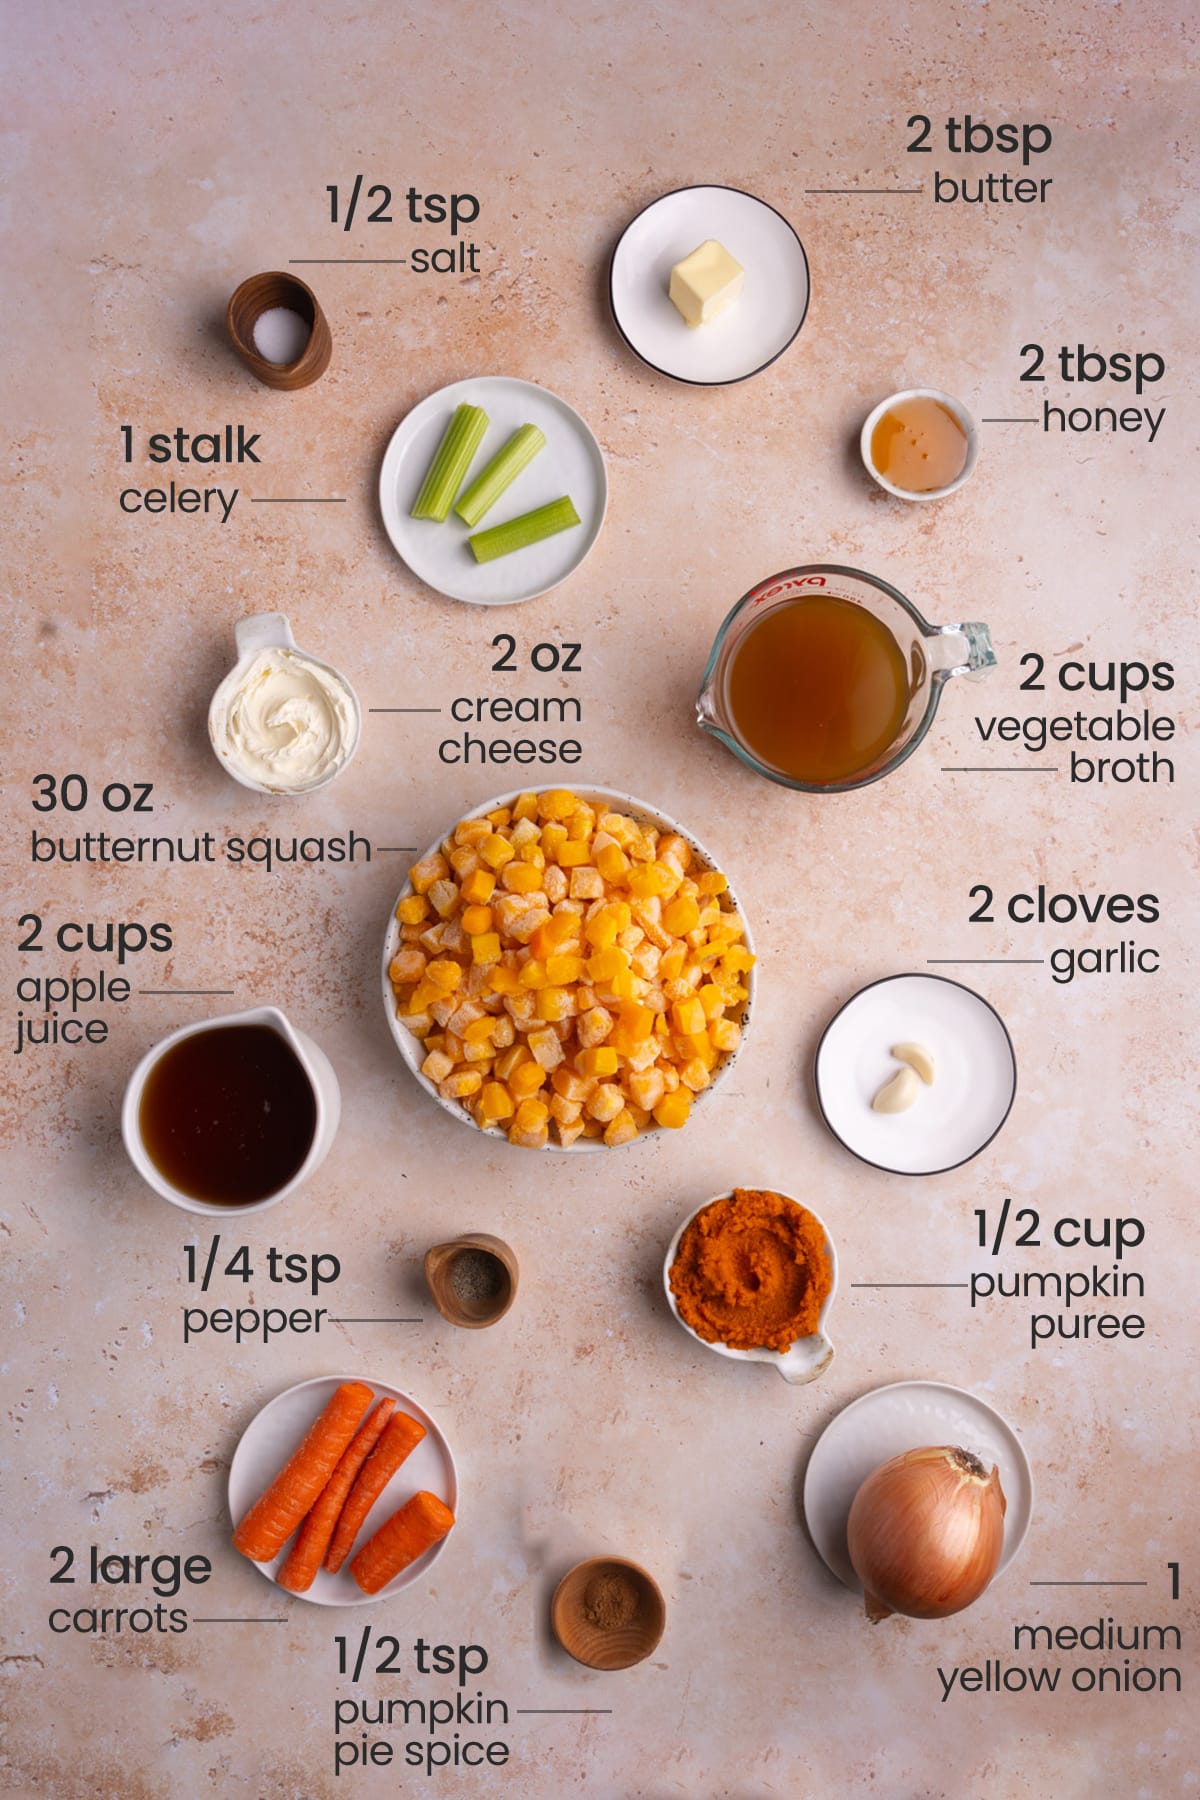 ingredients for autumn squash soup - salt, butter, honey, celery, cream cheese, vegetable broth, butternut squash, apple juice, garlic, pepper, pumpkin puree, carrots, pumpkin pie spice, yellow onion